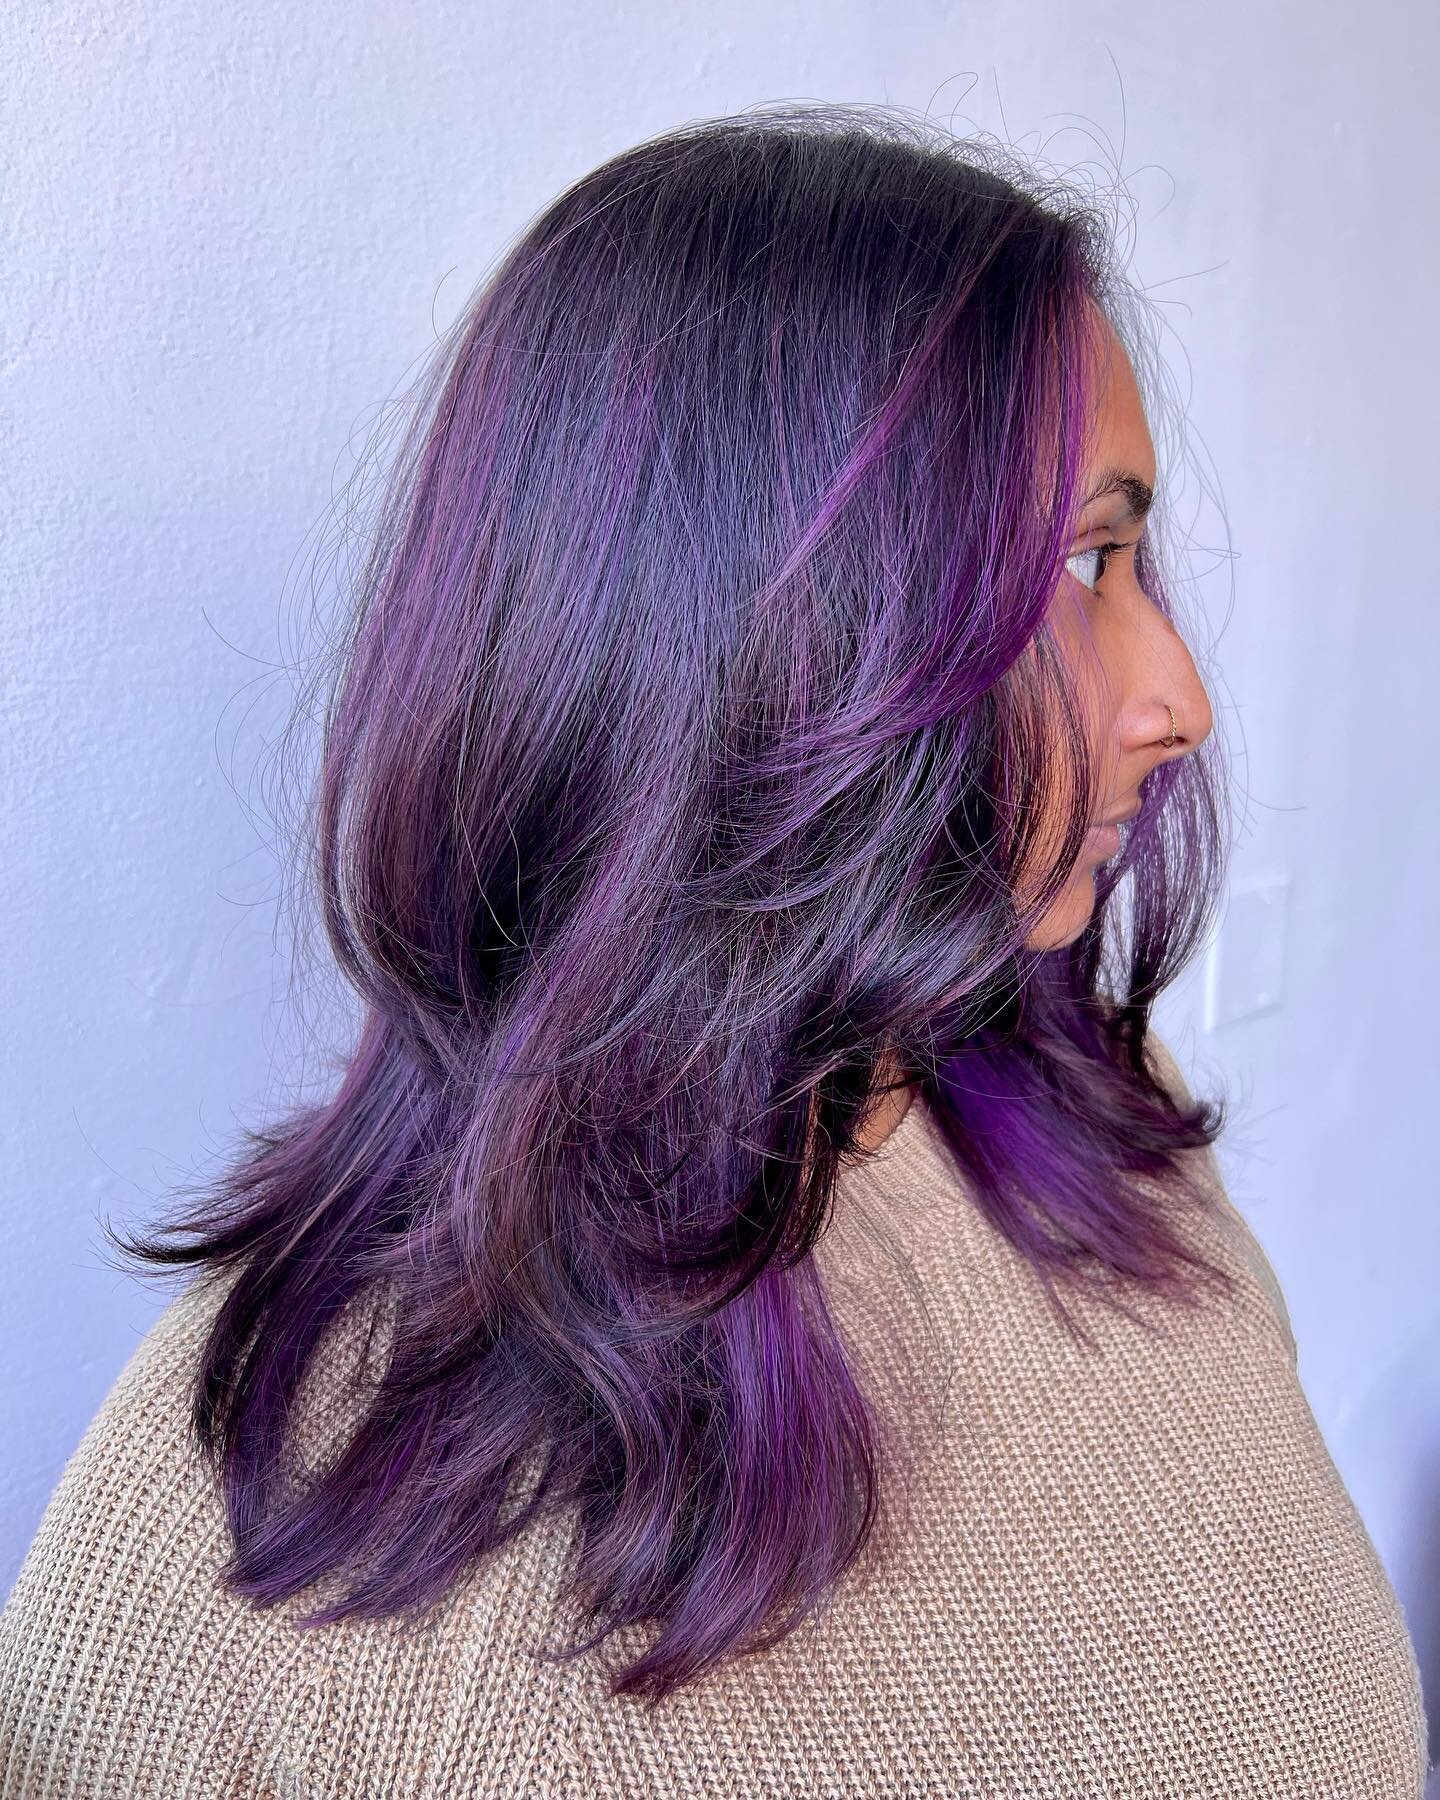 Over Highlighted Hair &gt;&gt;&gt; 𝐁𝐚𝐥𝐚𝐲𝐚𝐠𝐞 + 𝐃𝐢𝐦𝐞𝐧𝐬𝐢𝐨𝐧 𝐃𝐫𝐨𝐩 + 𝐒𝐞𝐦𝐢 𝐏𝐞𝐫𝐦𝐚𝐧𝐞𝐧𝐭 𝐎𝐯𝐞𝐫𝐥𝐚𝐲 &gt;&gt;&gt; Hellooo Purple Goddess 💜
&bull;
&bull;
&bull;
&bull;
&bull;
&bull;
#dimensionalcolor #purplehair #balayage #l